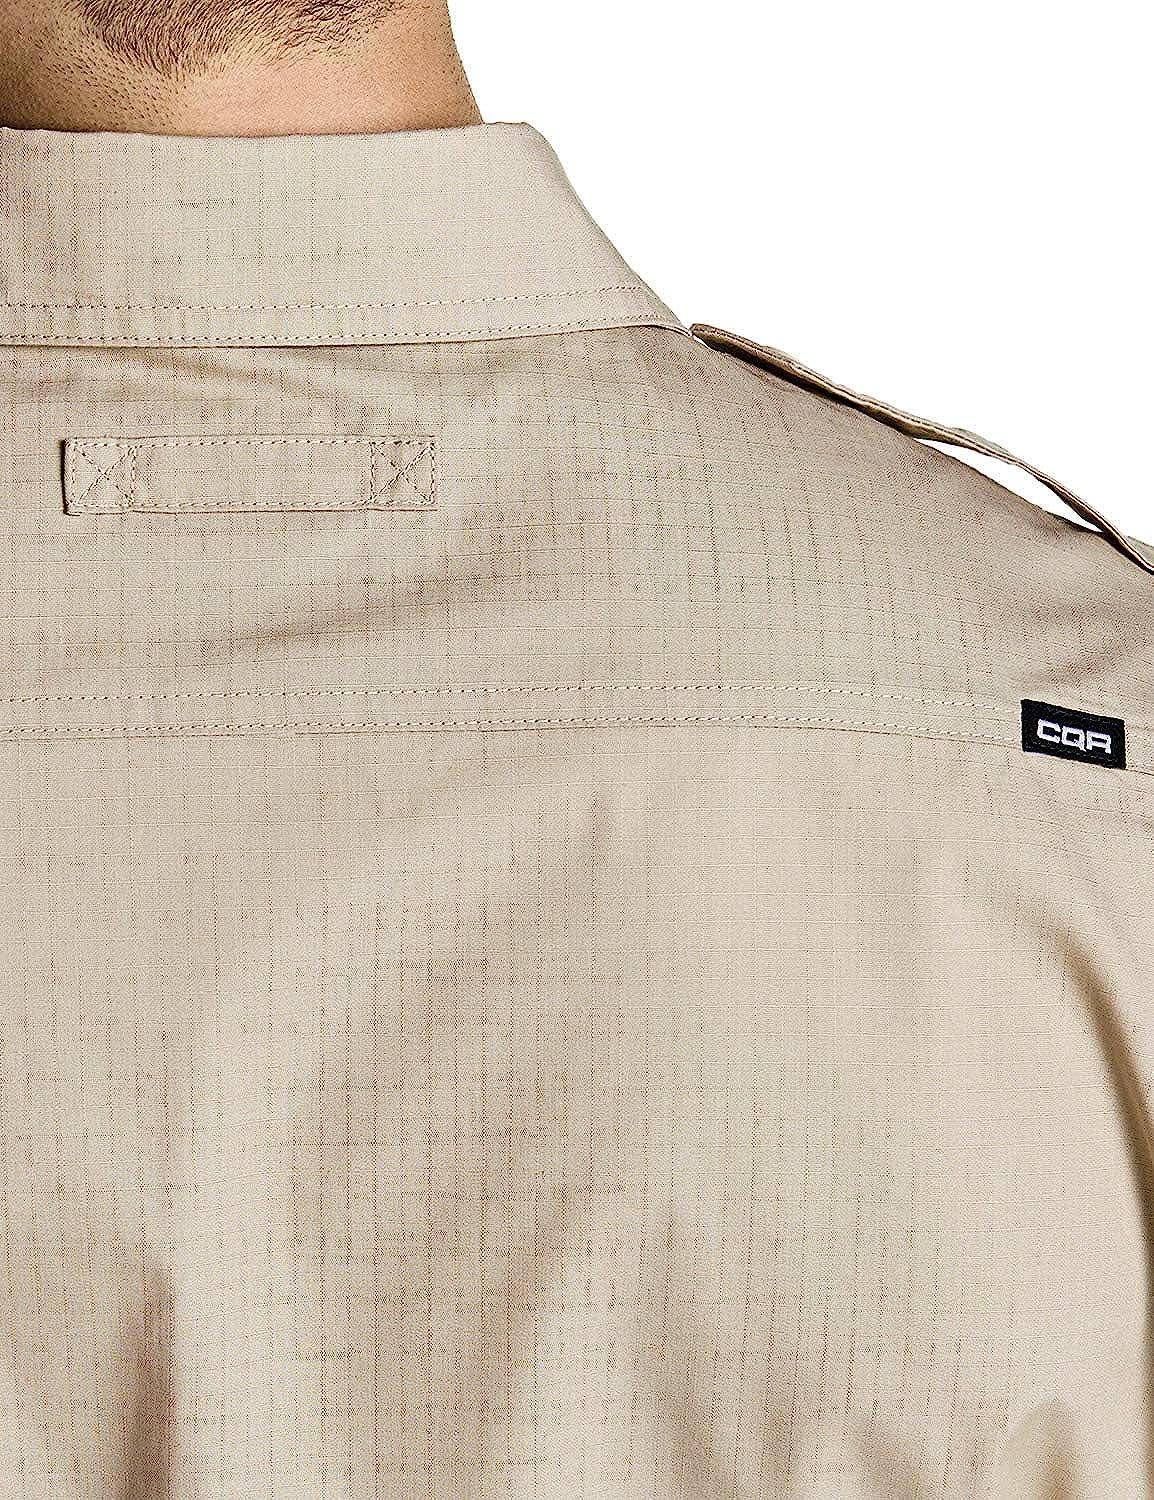 CQR Men's Long Sleeve Work Shirts, Ripstop Military Tactical